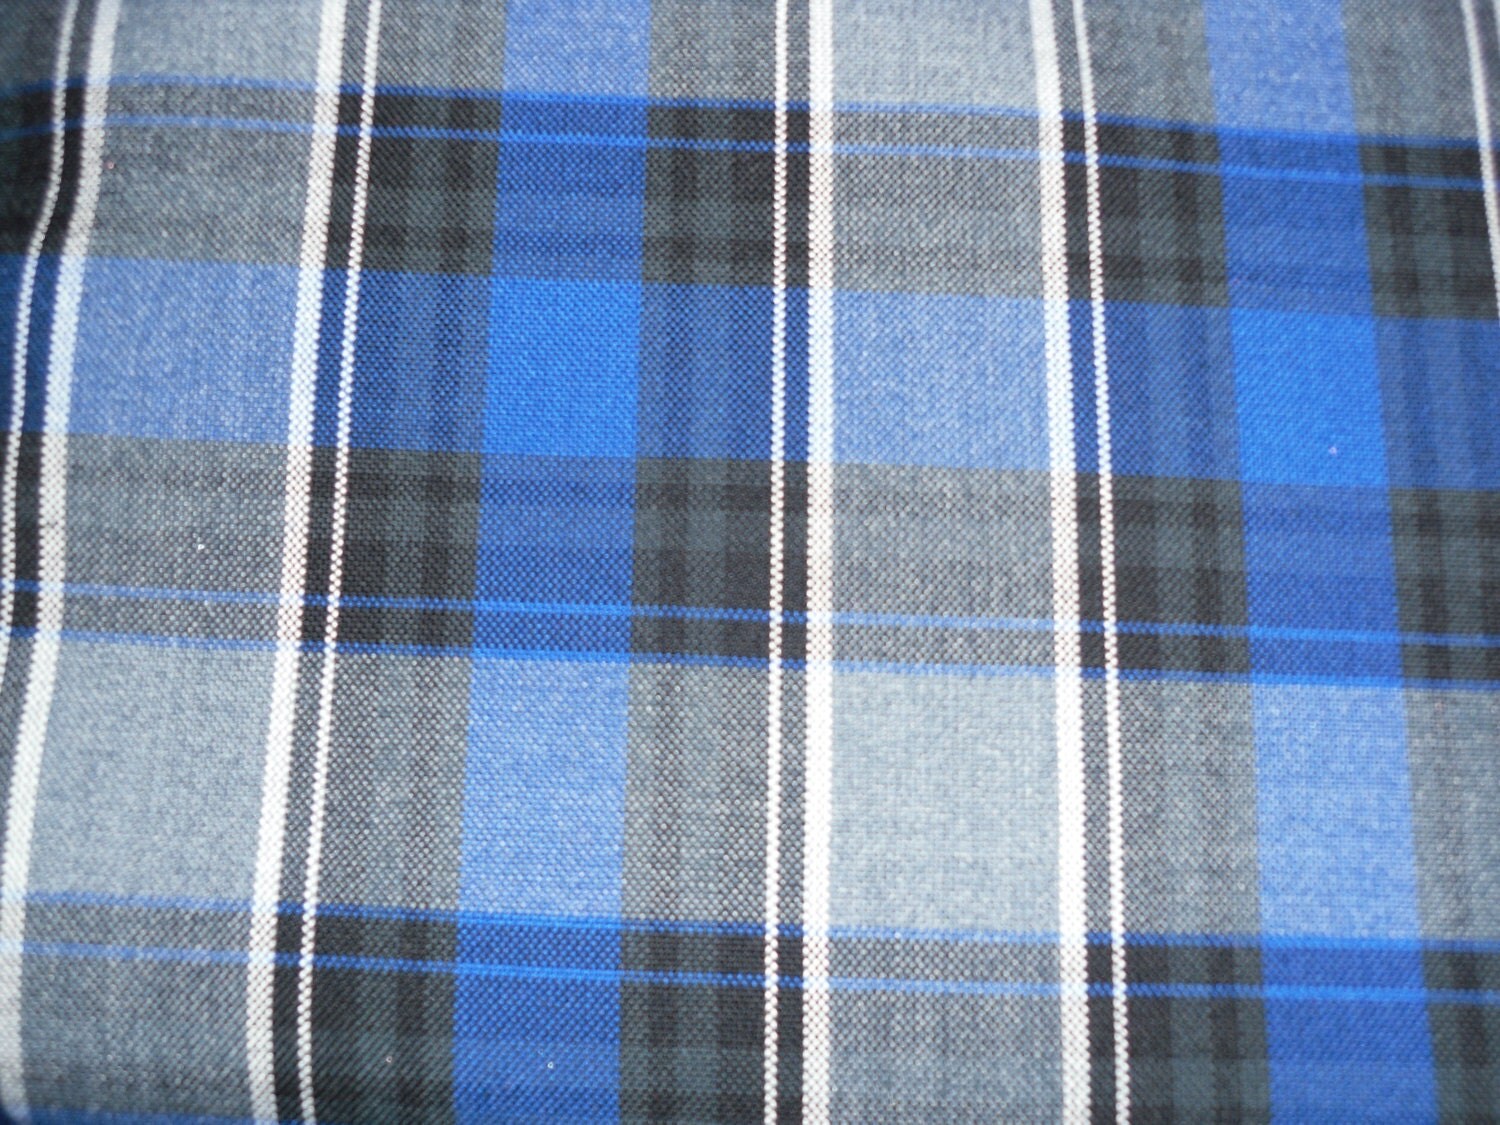 Tartan plaid fabric blue11 blue grey white